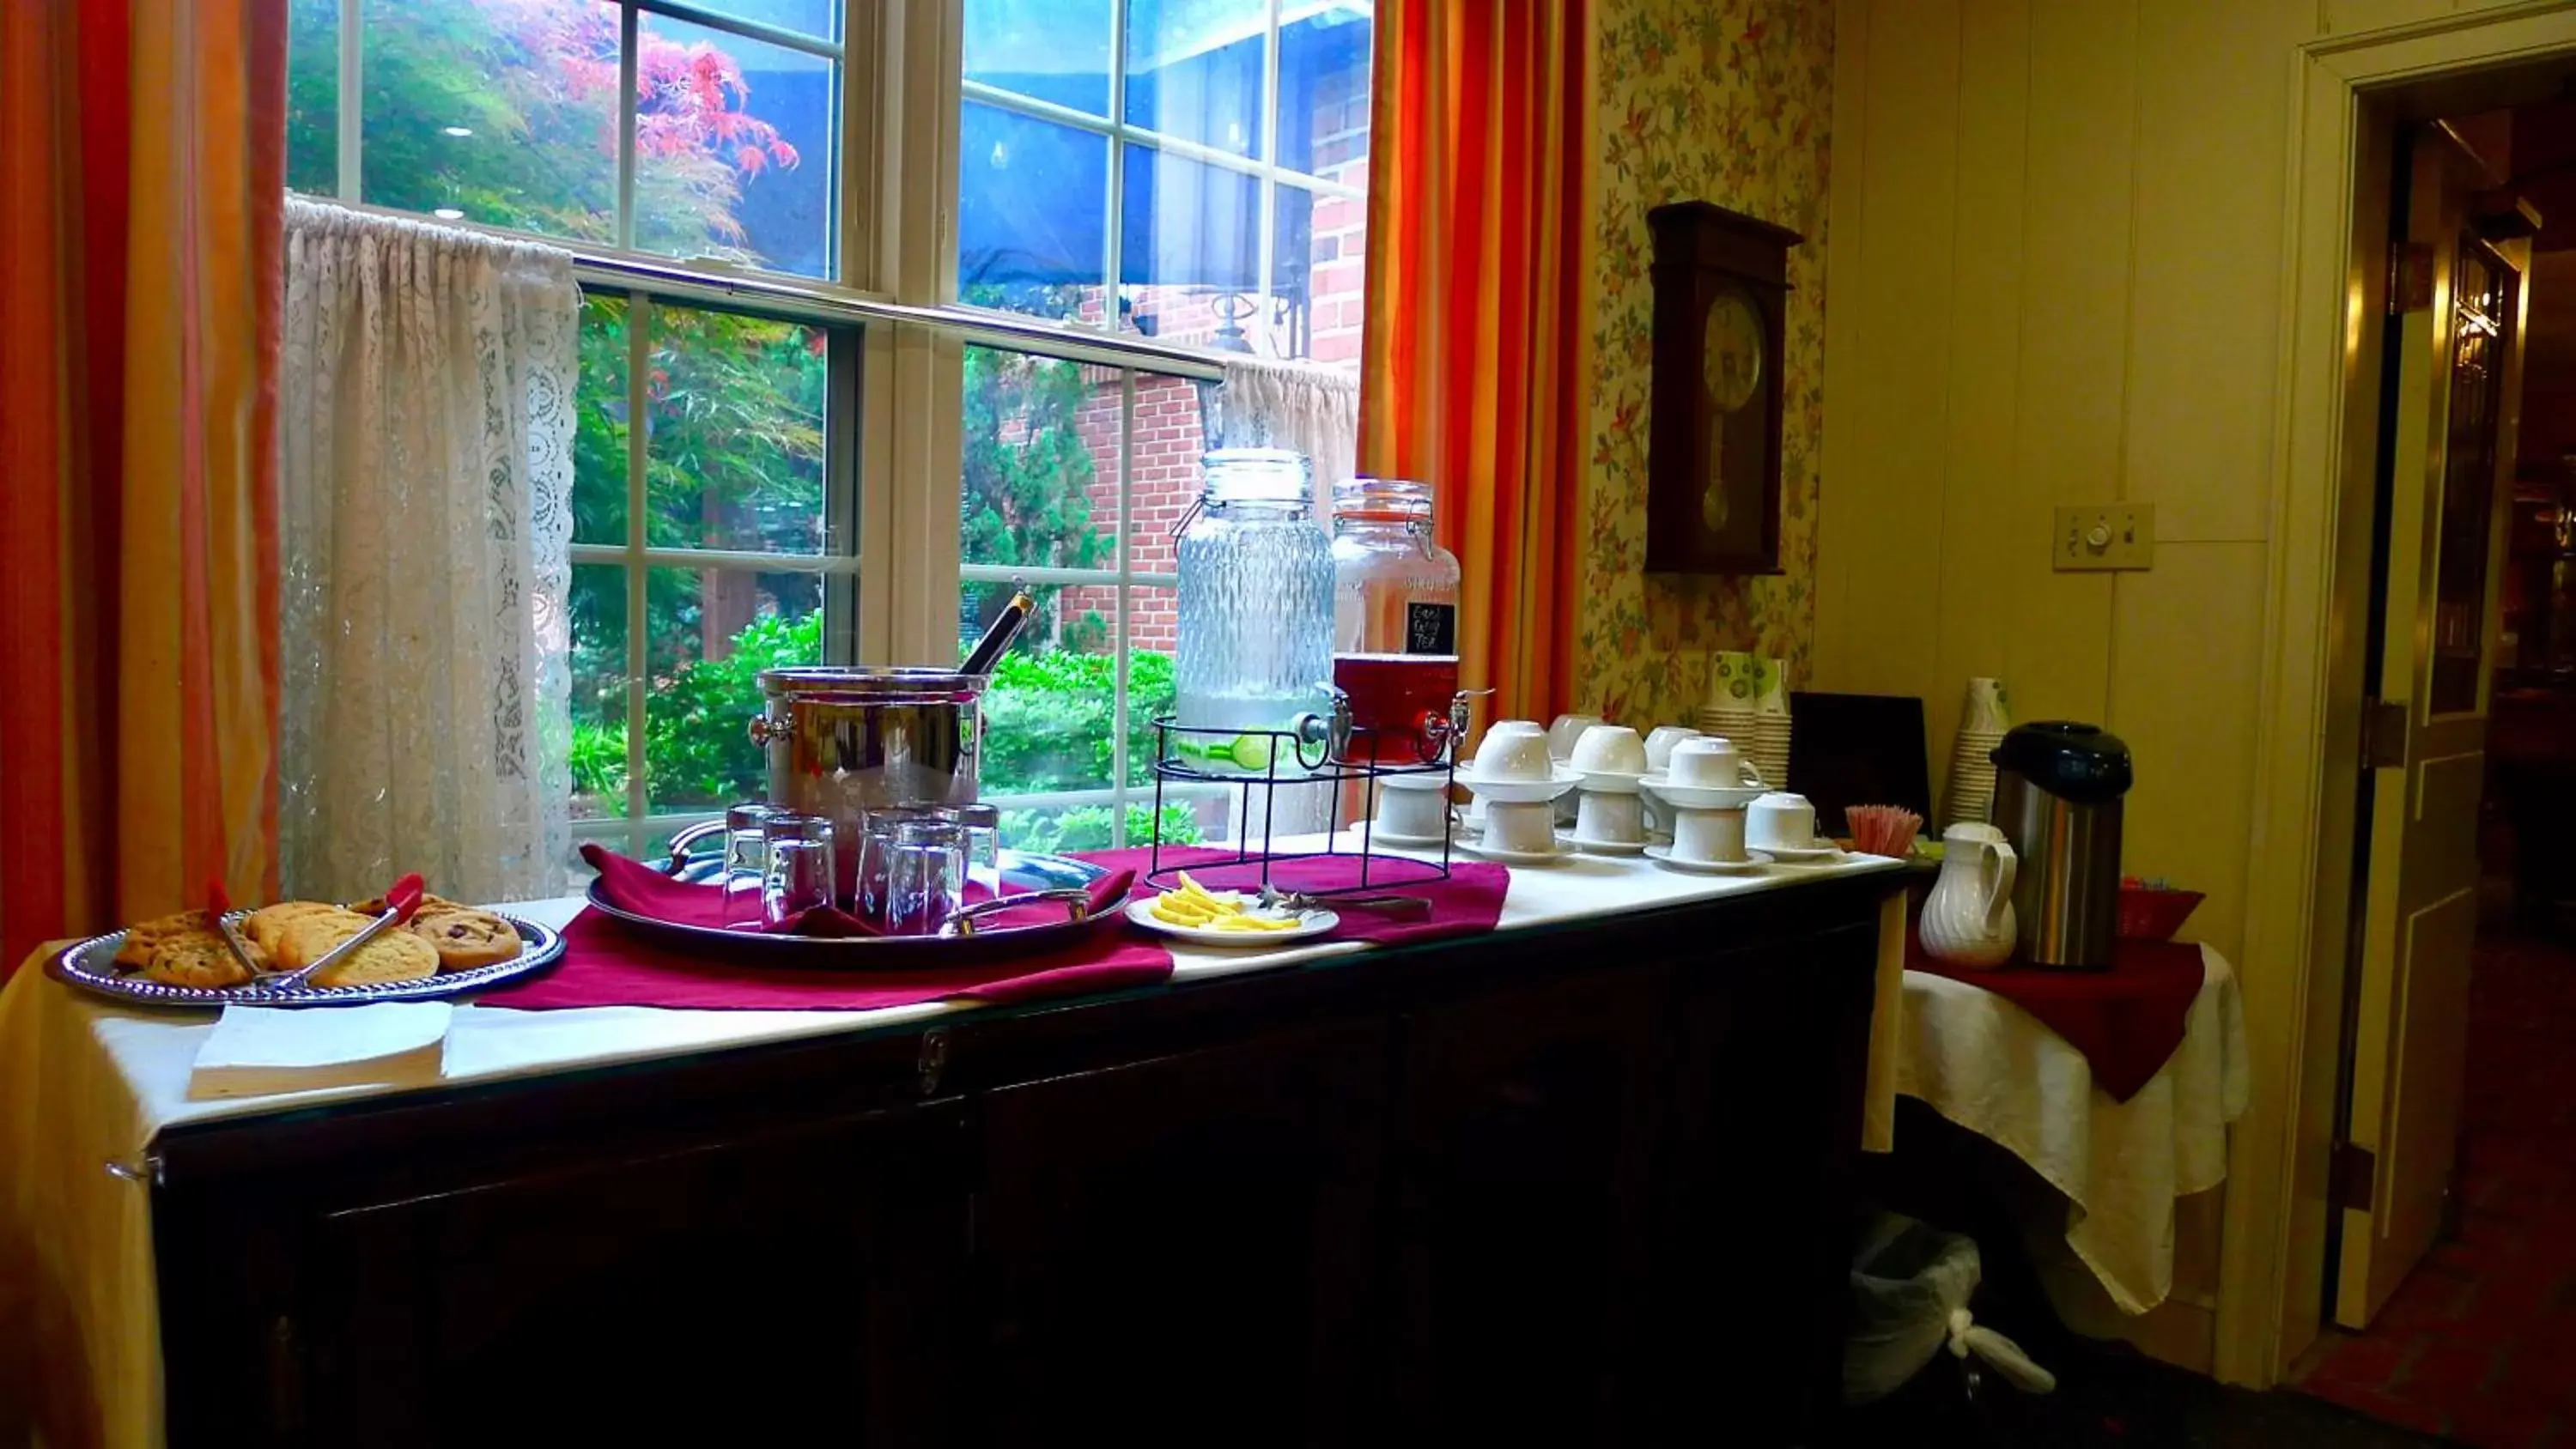 Coffee/tea facilities, Bathroom in Brandywine River Hotel